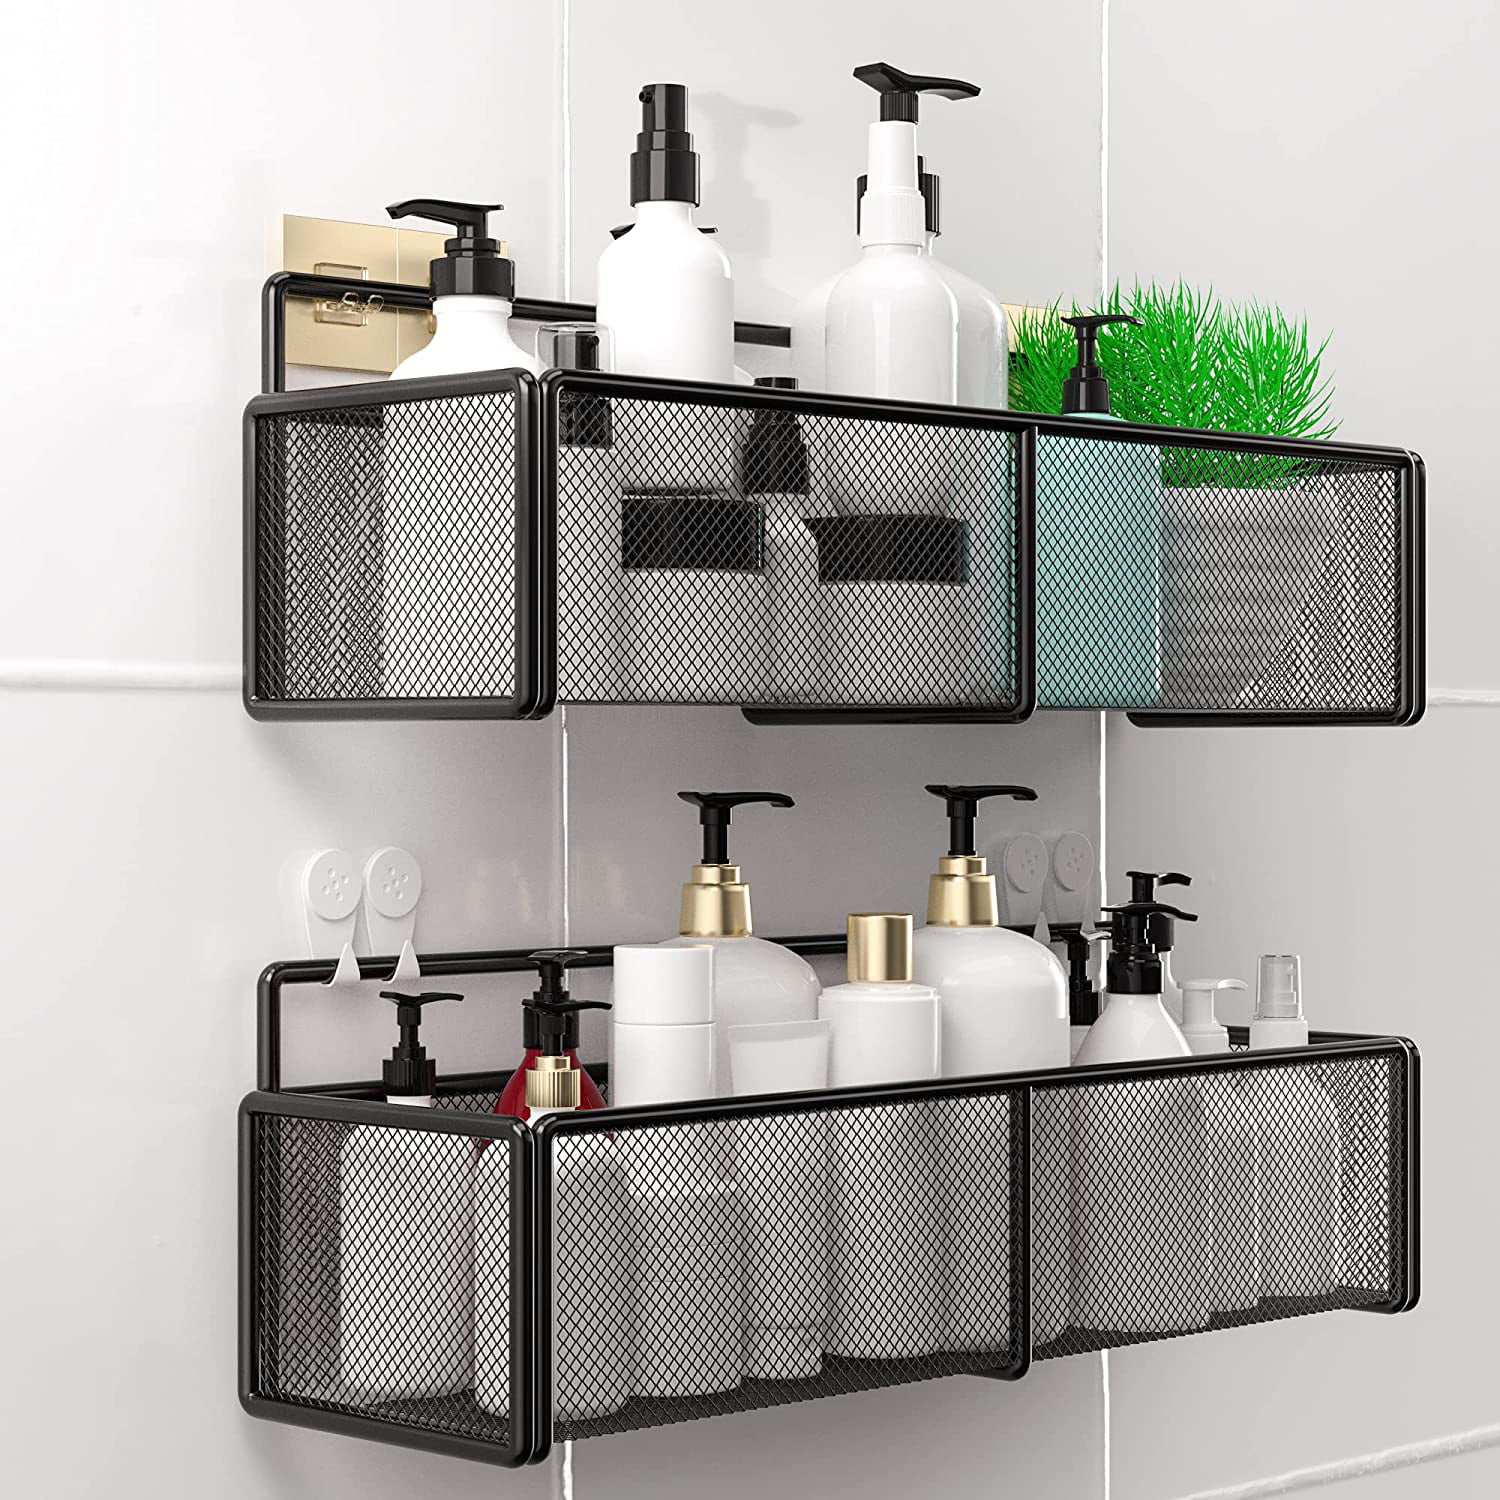 No Drilling Stainless Steel Wall Mount Bathroom Shelf Holder Basket Kitchen Rack 